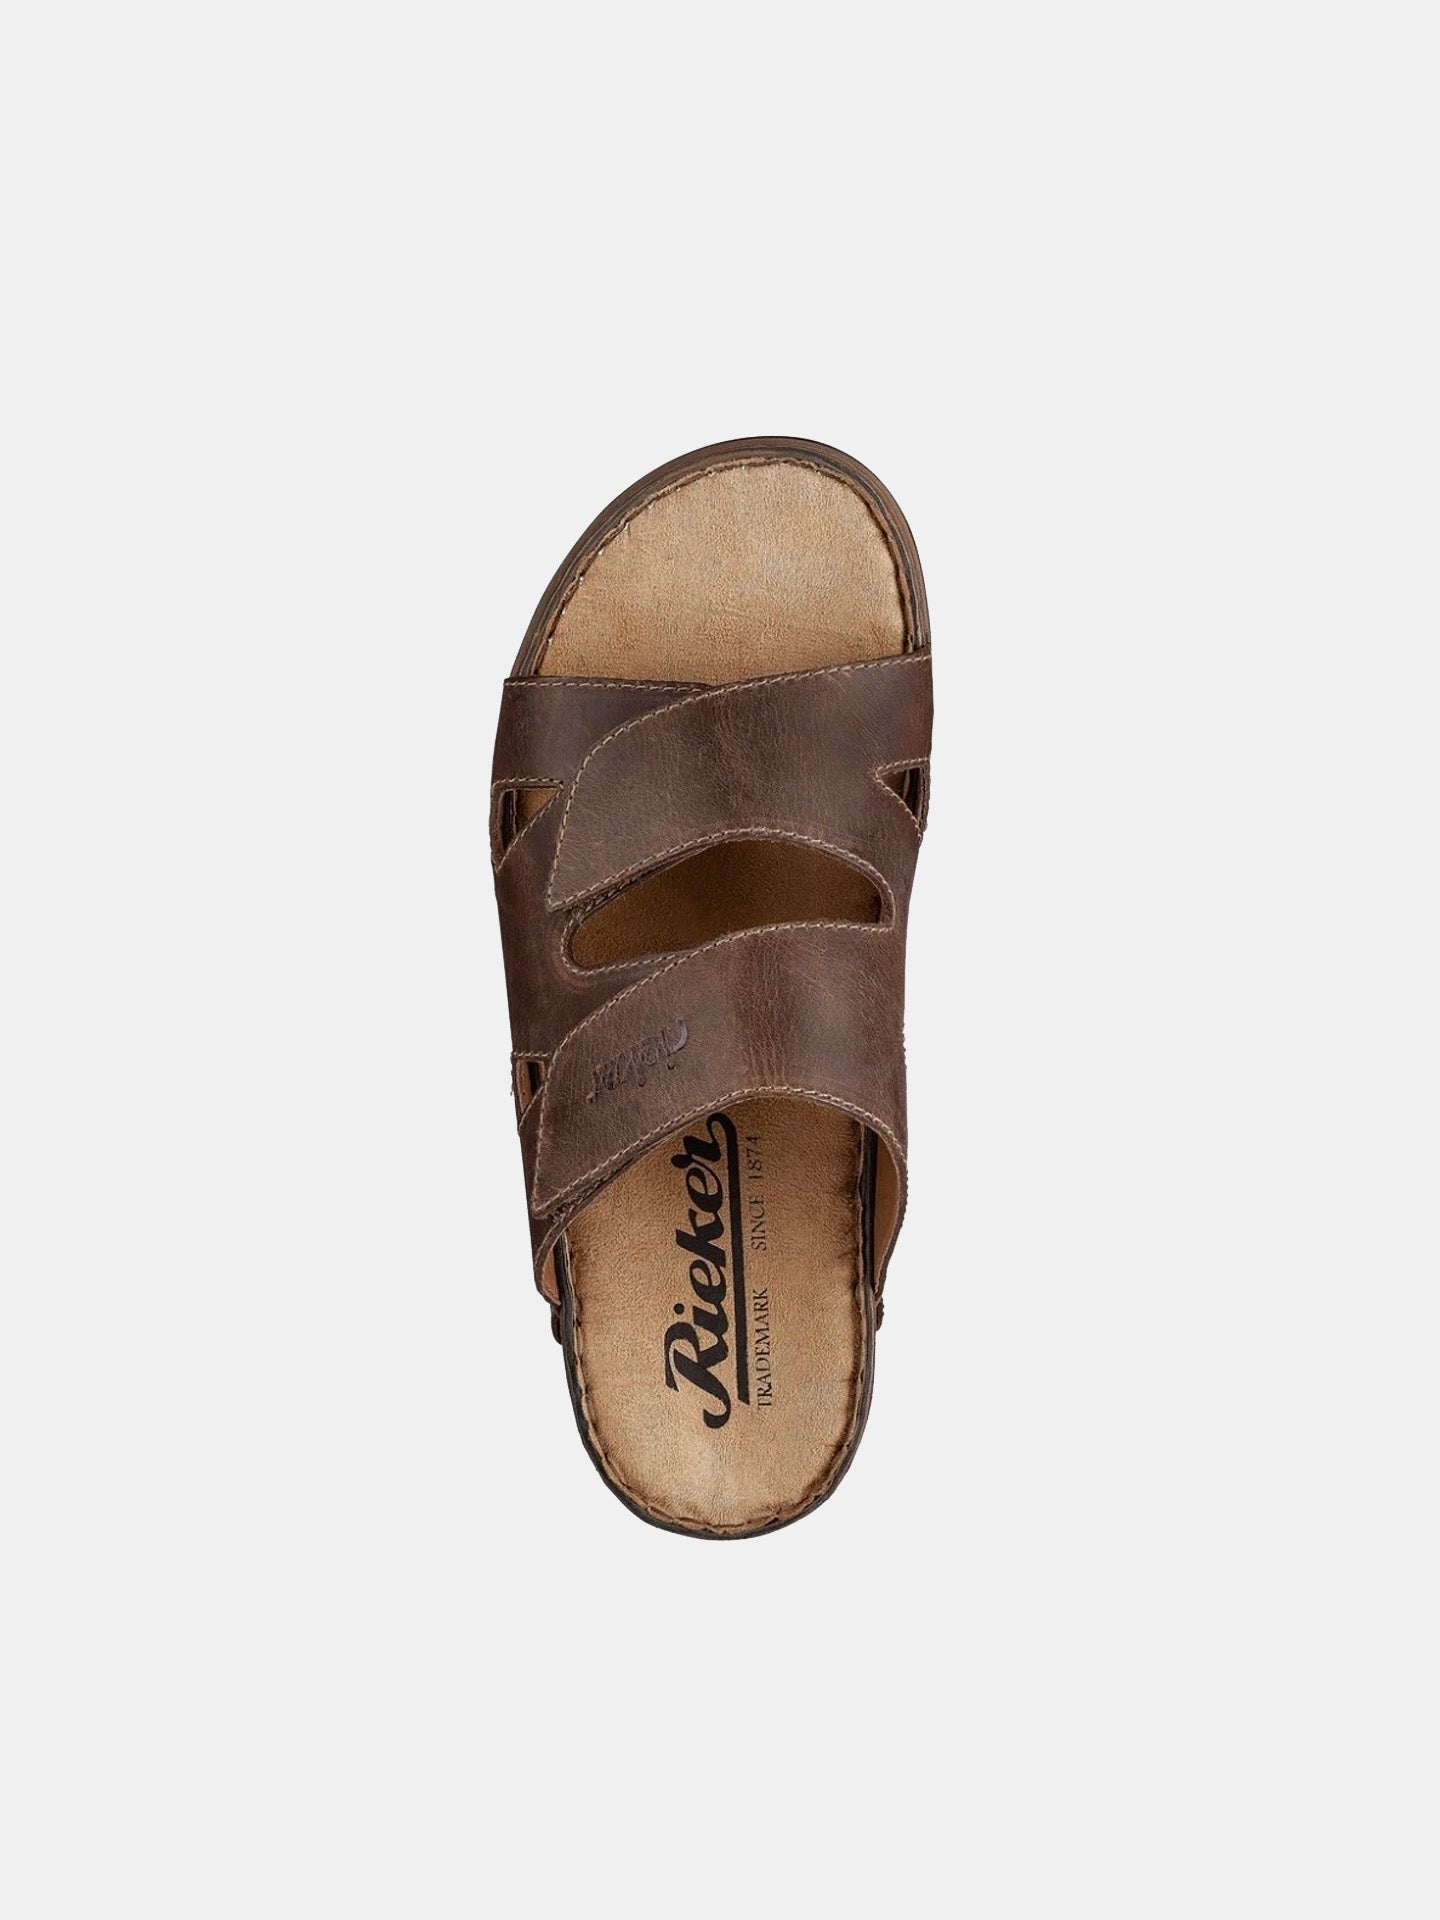 Rieker 25691 Men's Slider Sandals